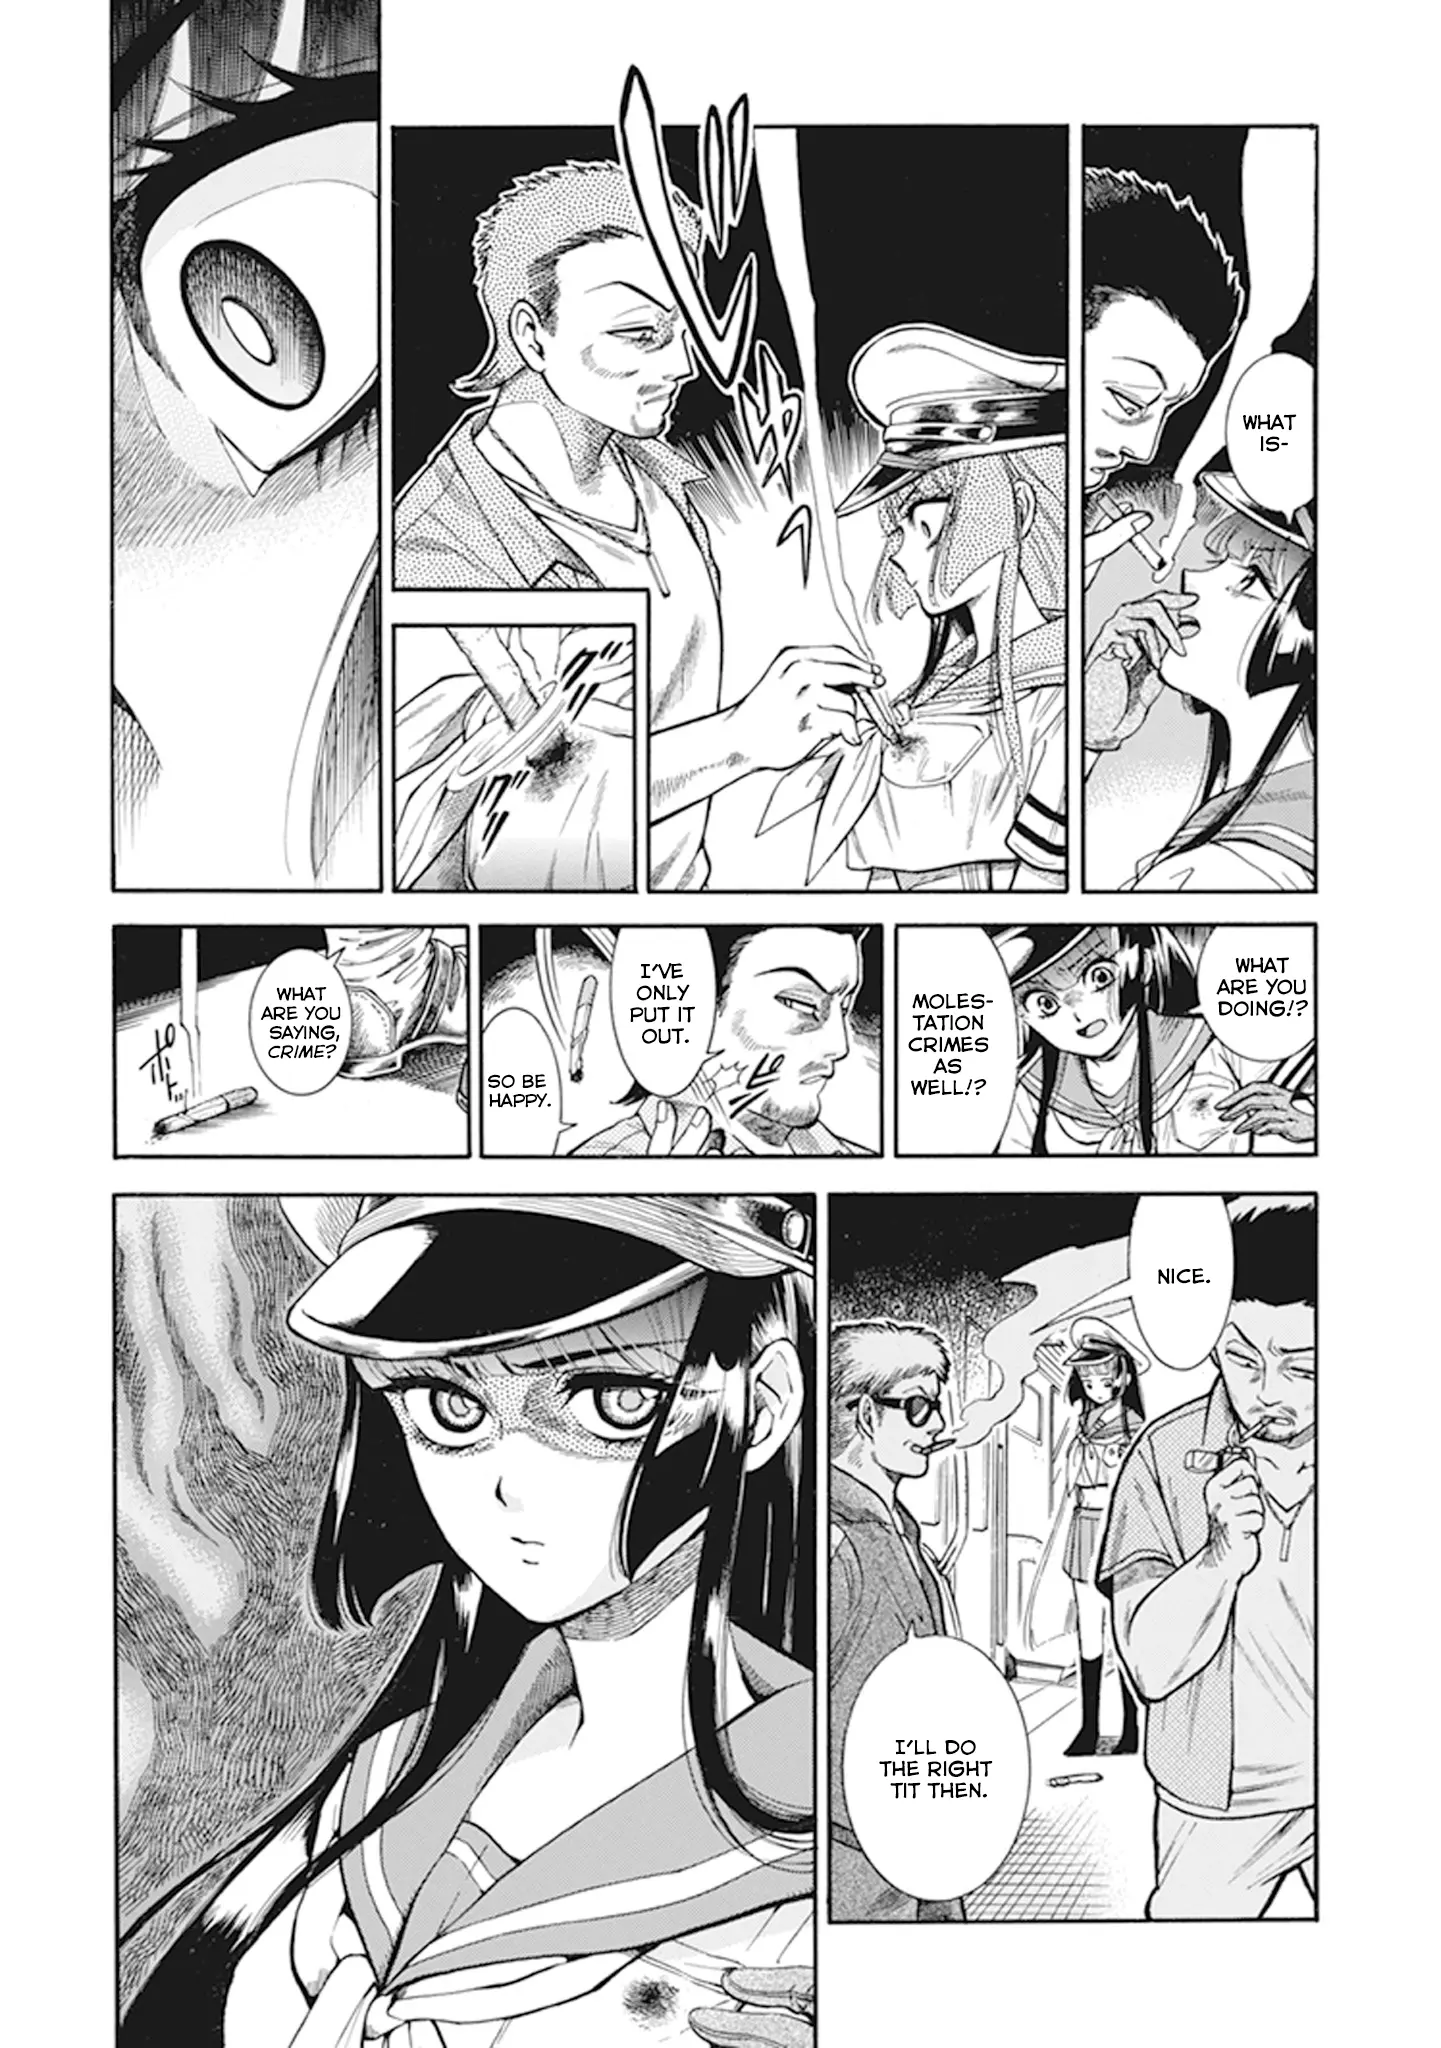 Glamorous Gathering Takahashi - 5 page 9-5a3bc1c9